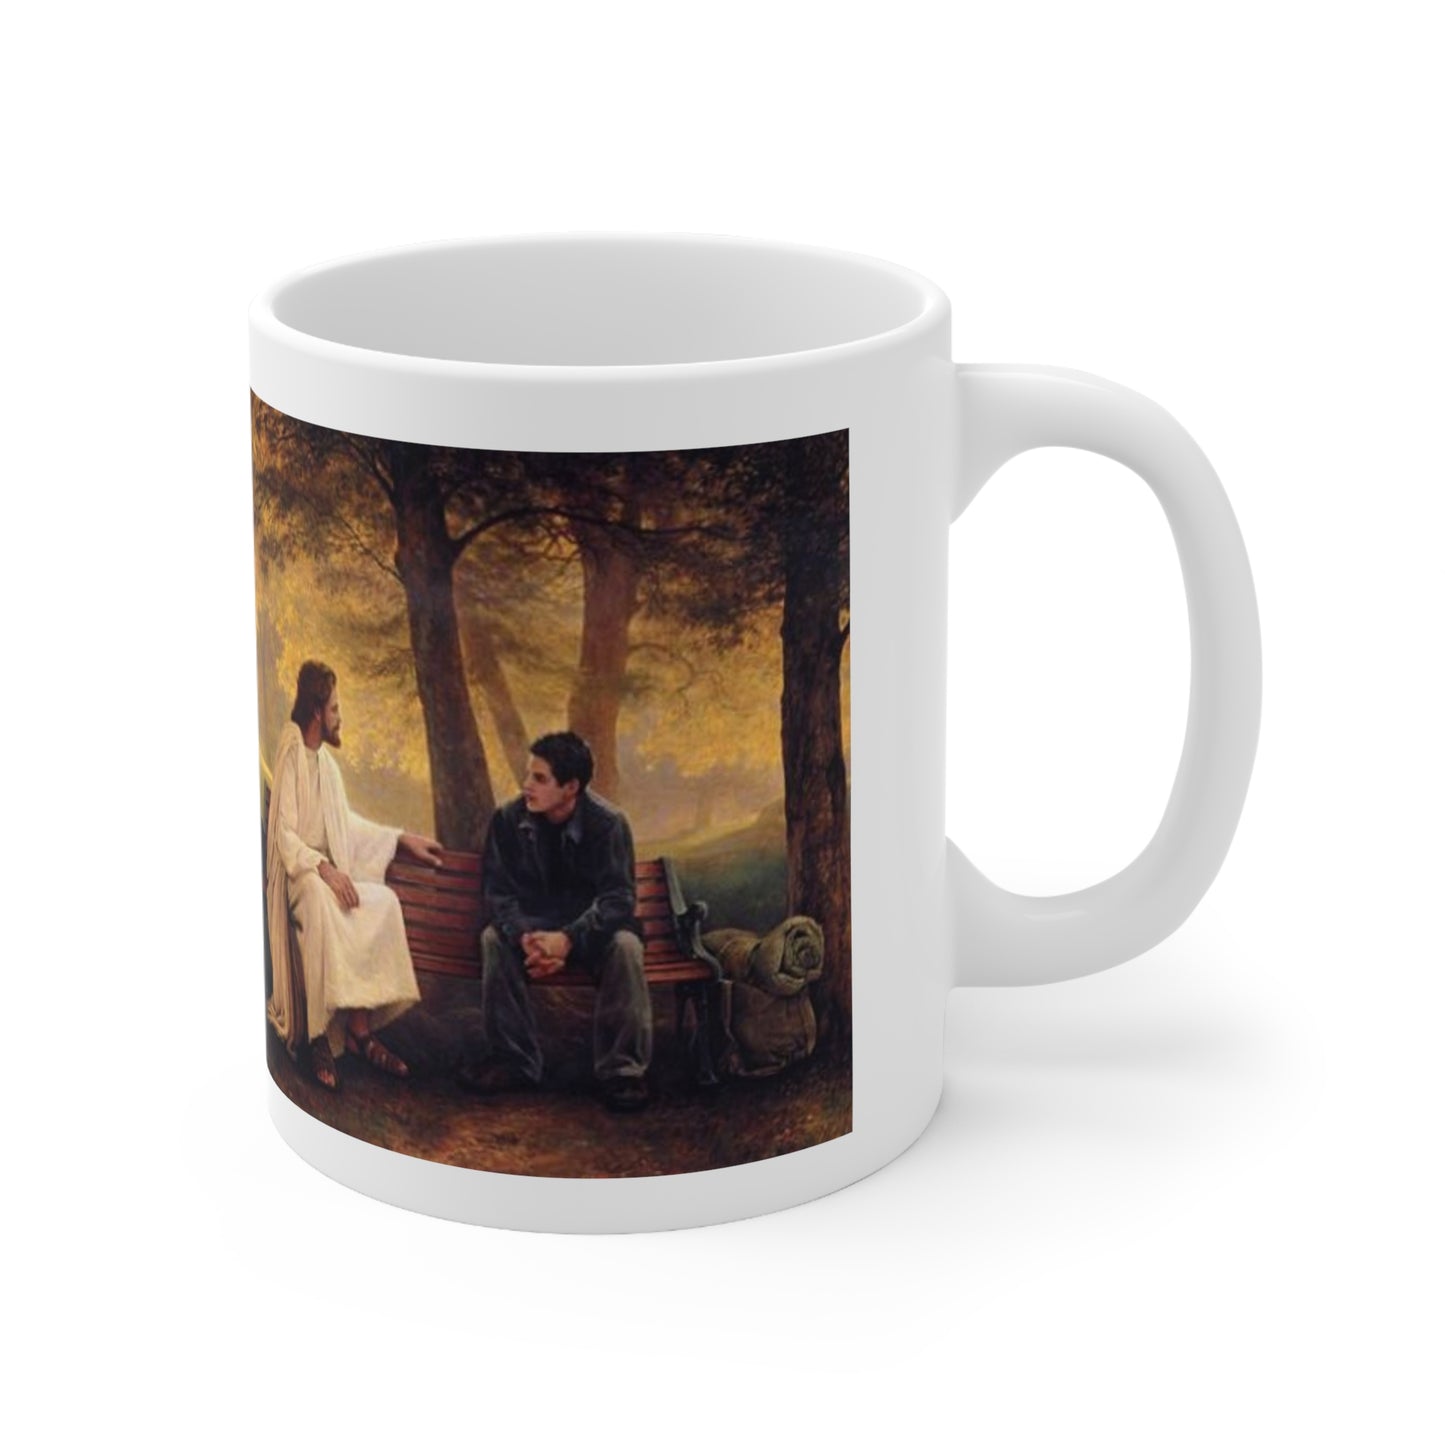 Coffee & Jesus Mug 11oz